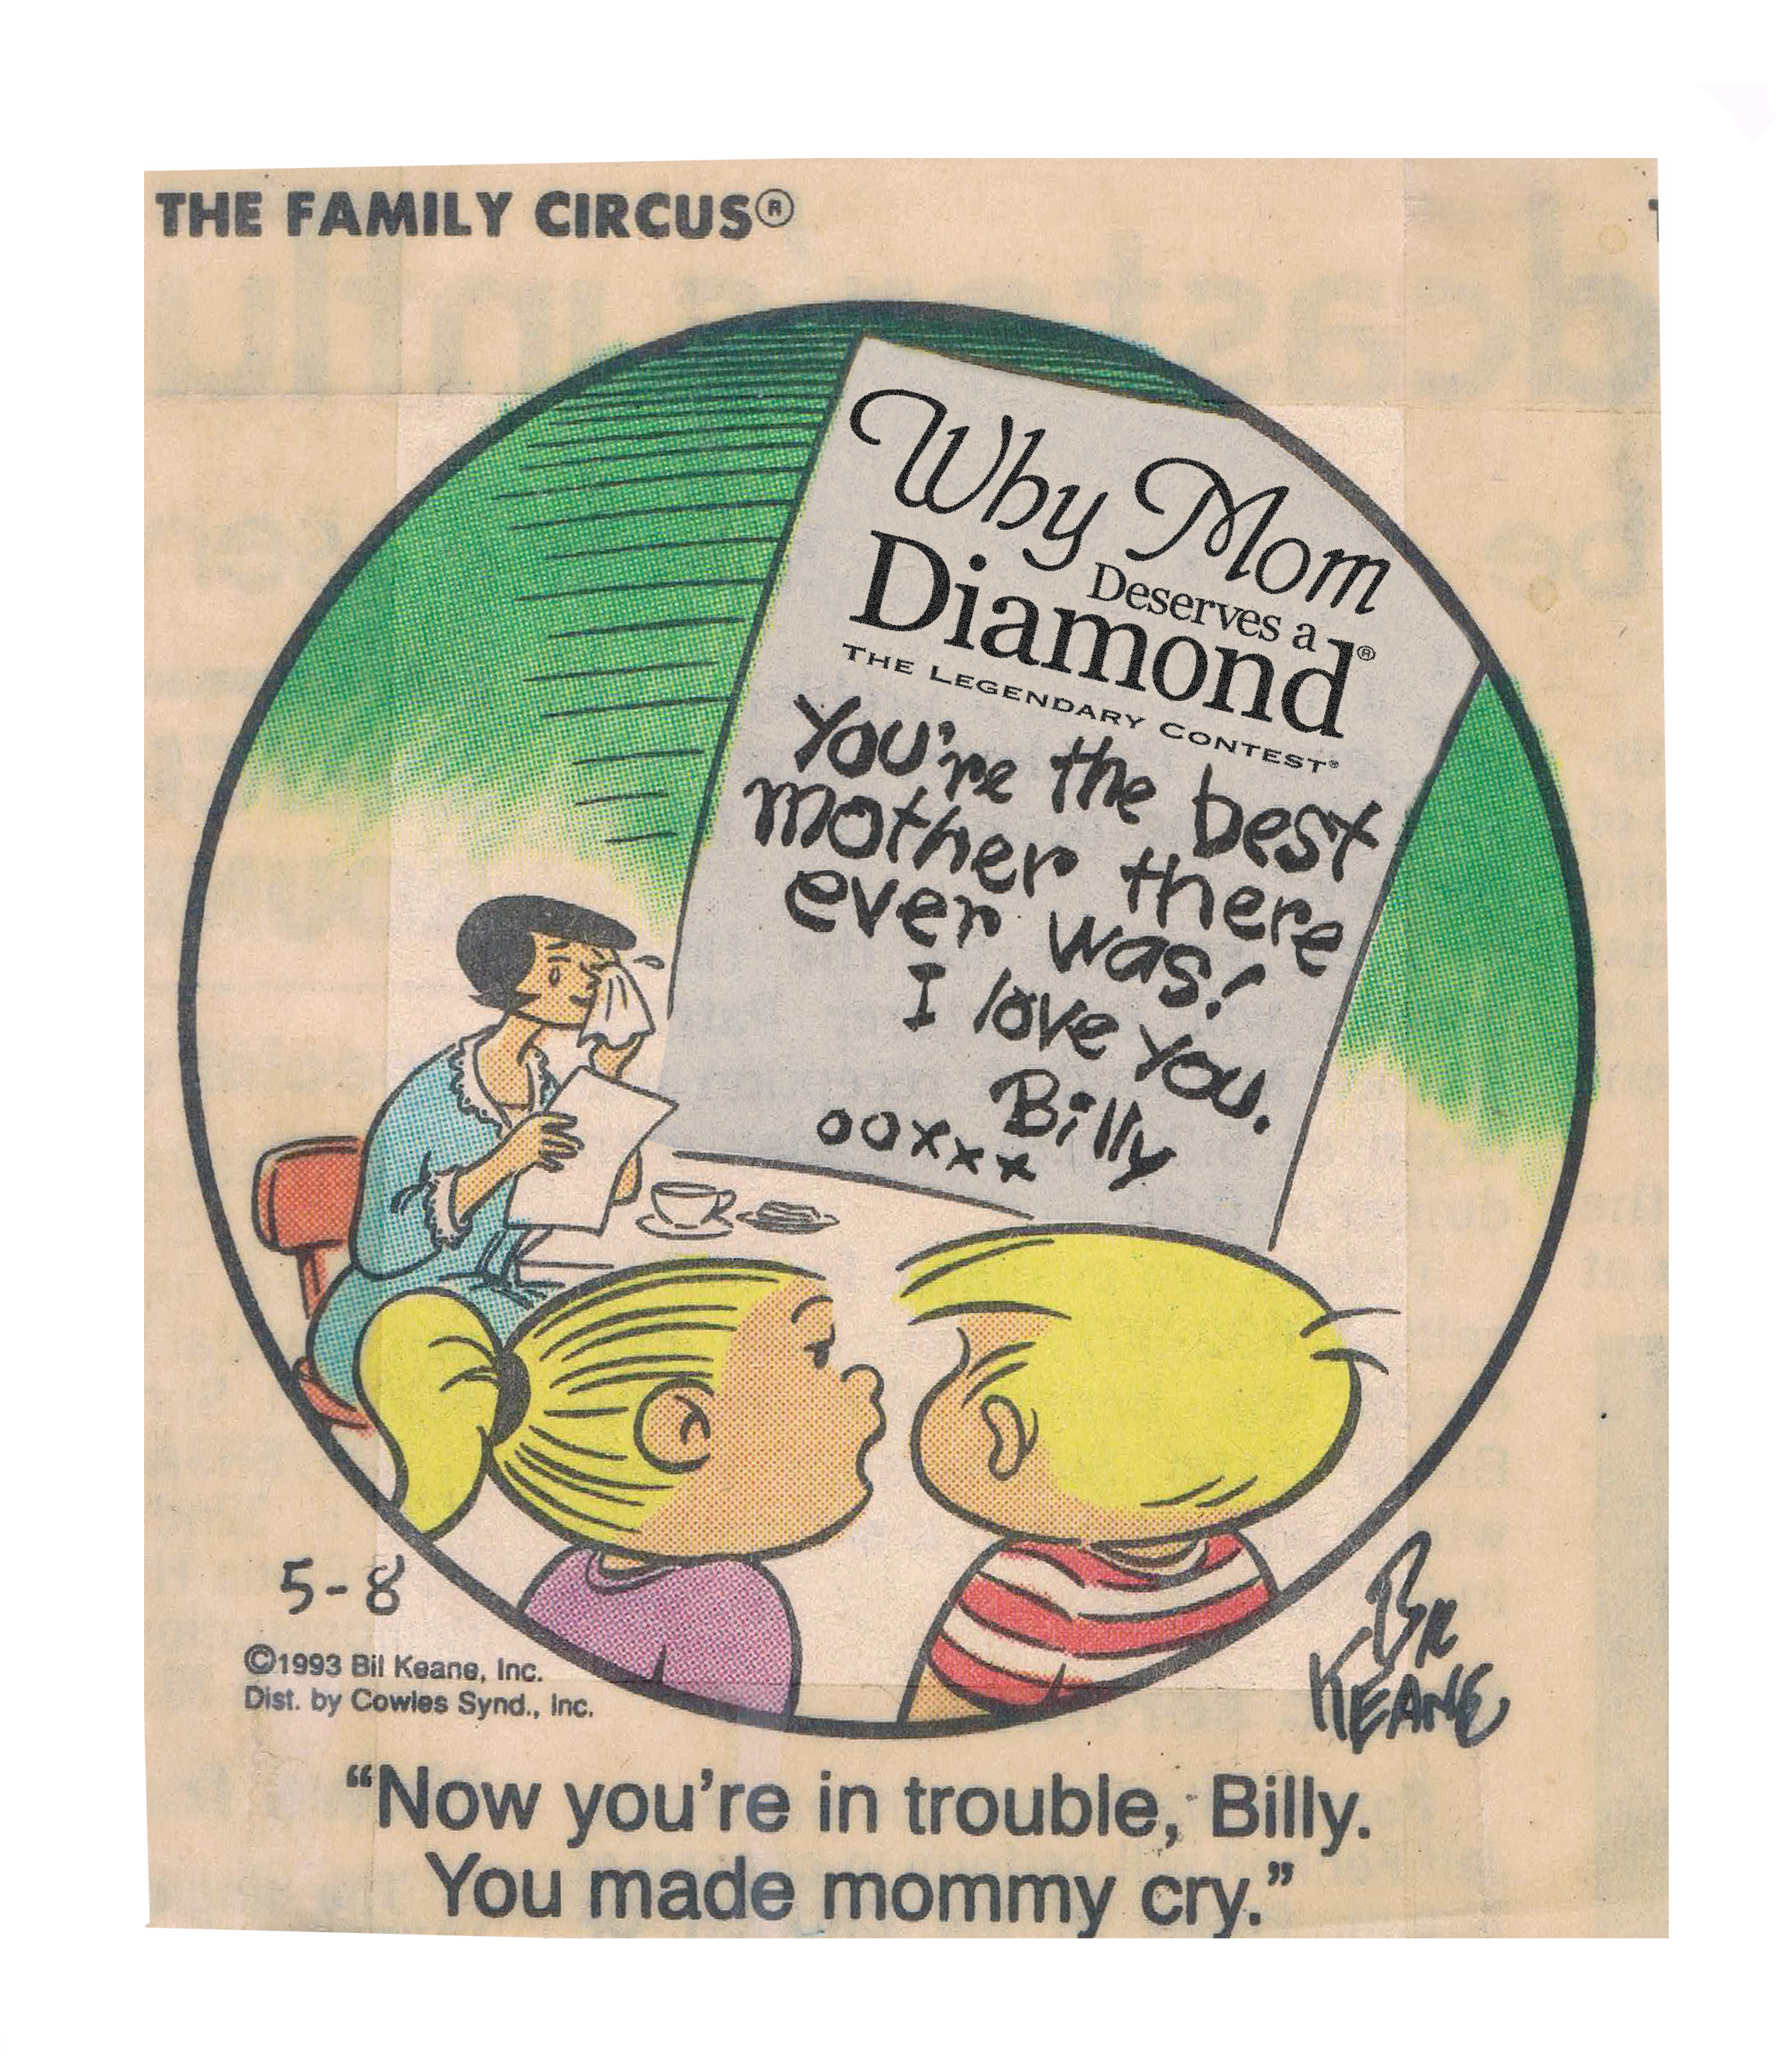 comic, family circus, diamond mike, Gallery of diamonds, newport beach, 92660, why mom deserves a diamond